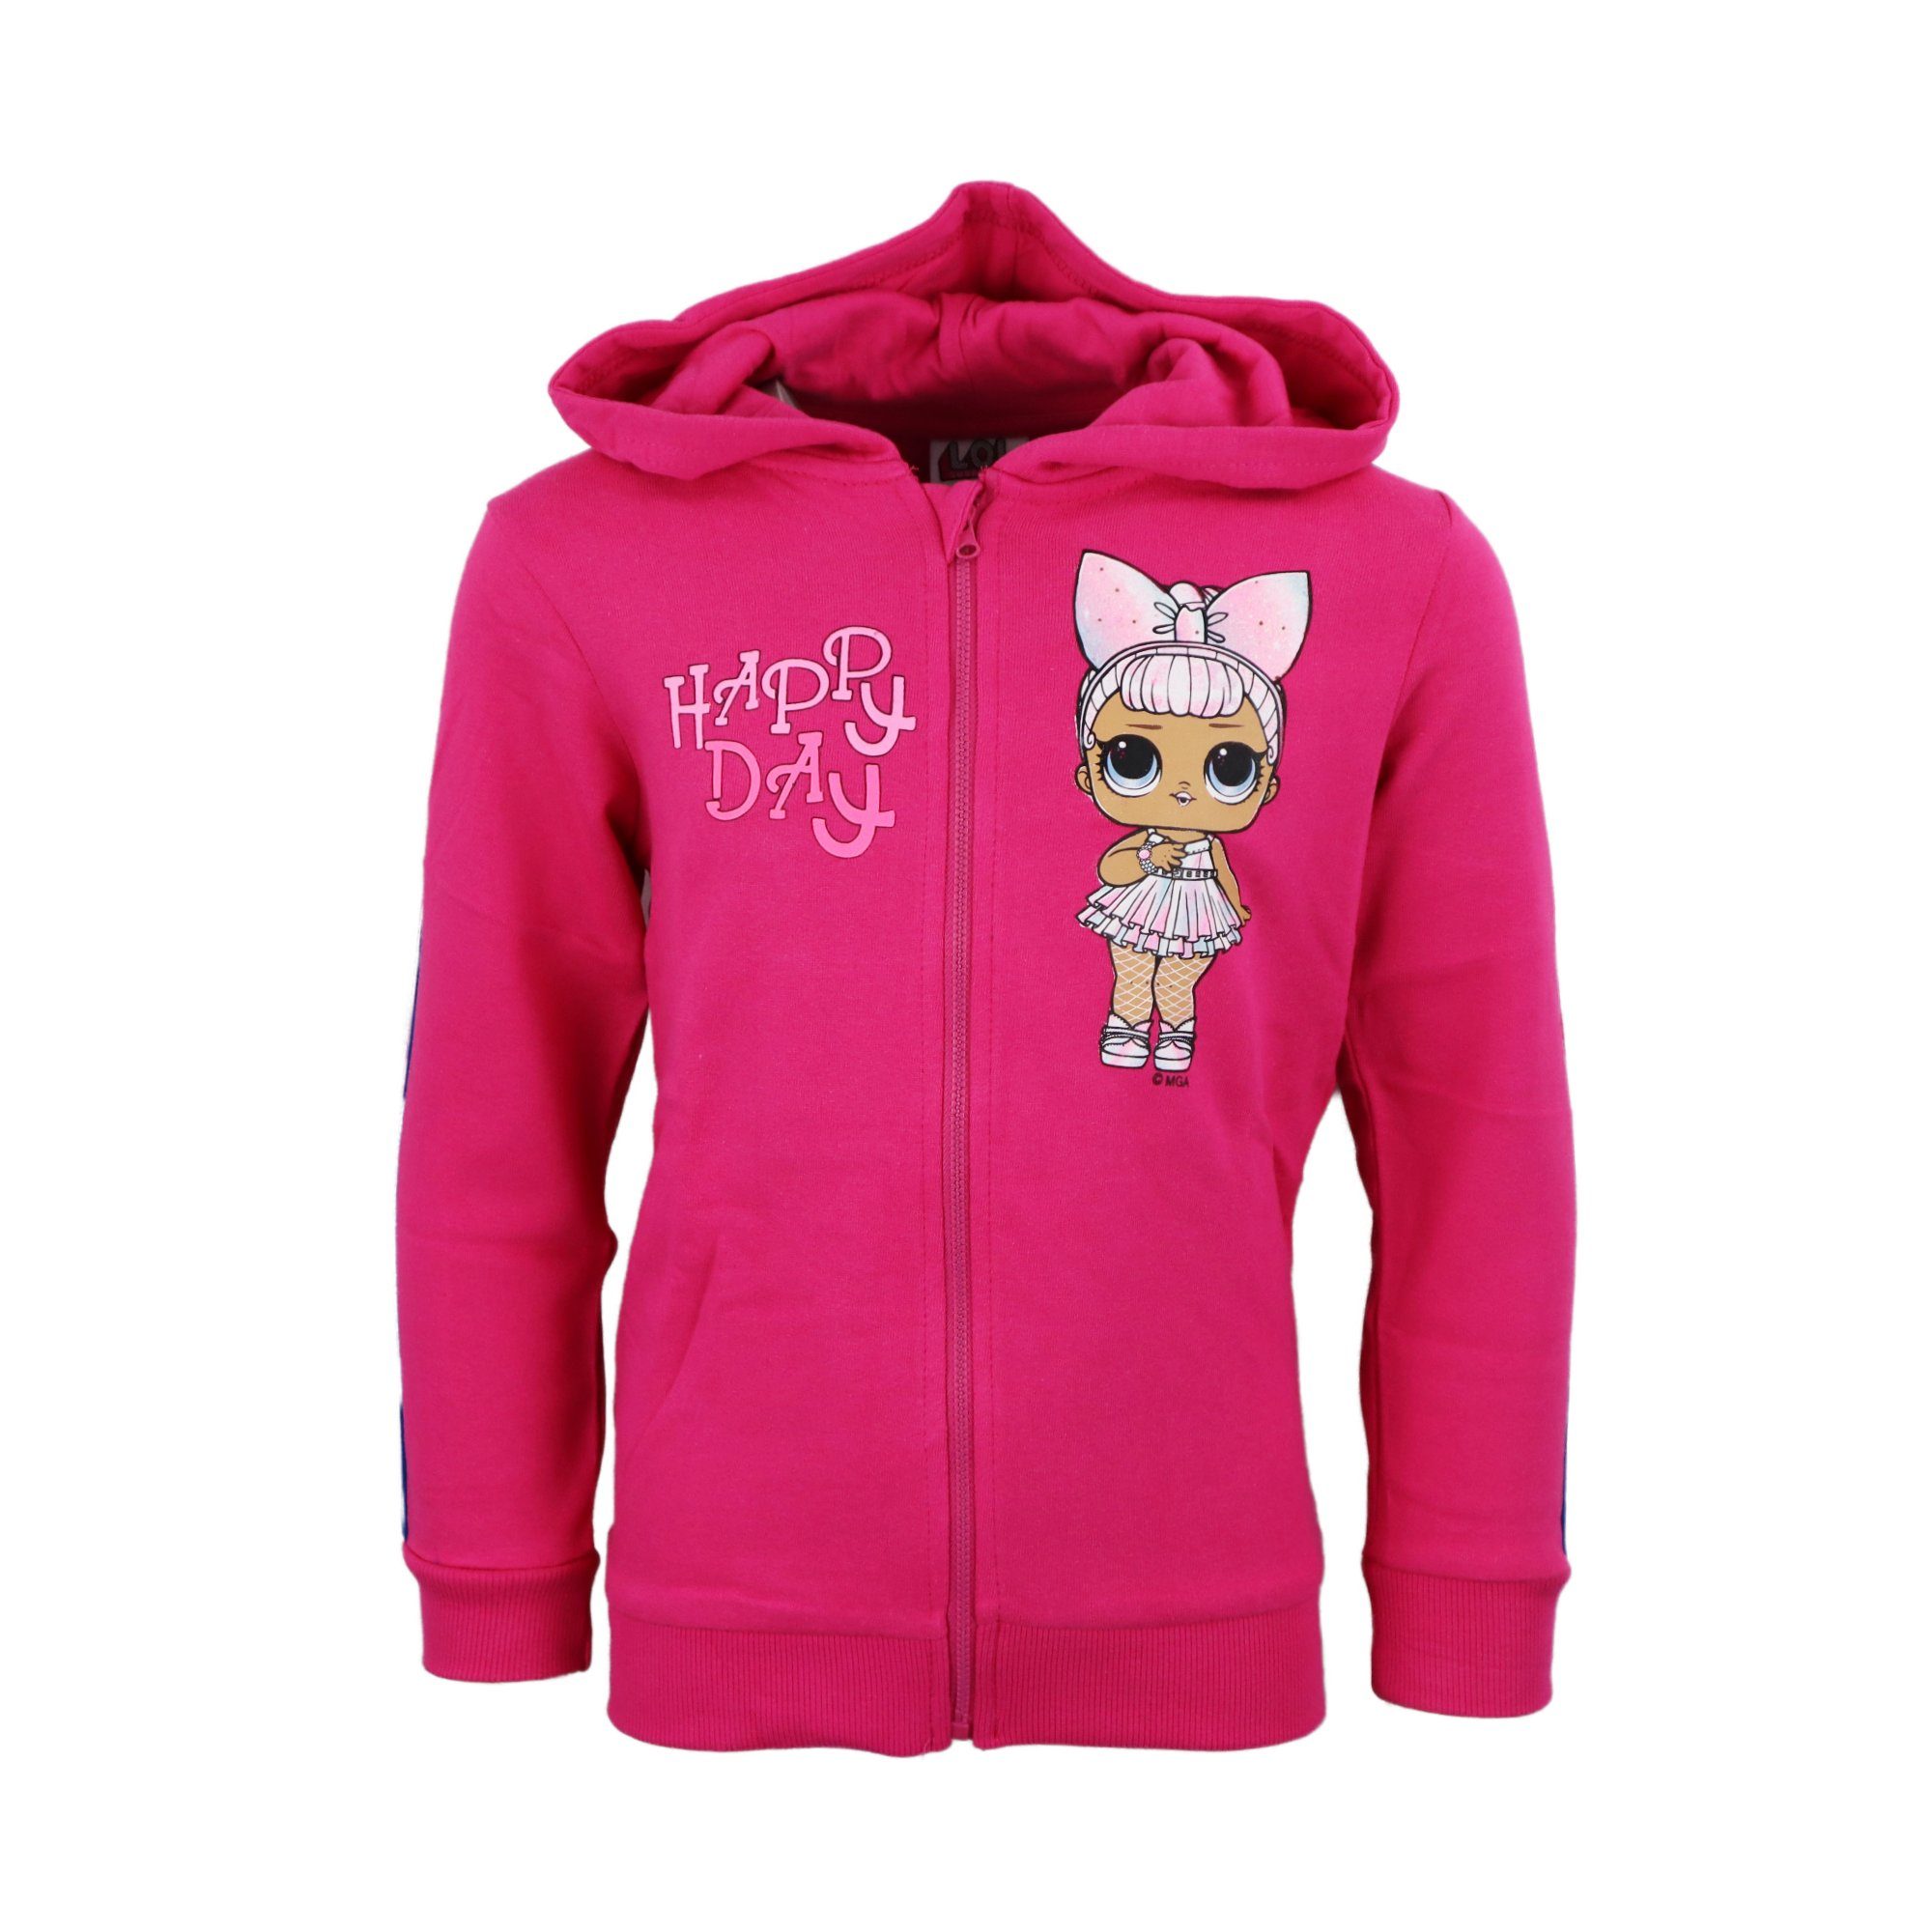 L.O.L. SURPRISE! Hoodie LOL Surprise Kinder Mädchen Kapuzen Pullover Gr. 104 bis 134, Baumwolle, Pink oder Grau | Sweatshirts